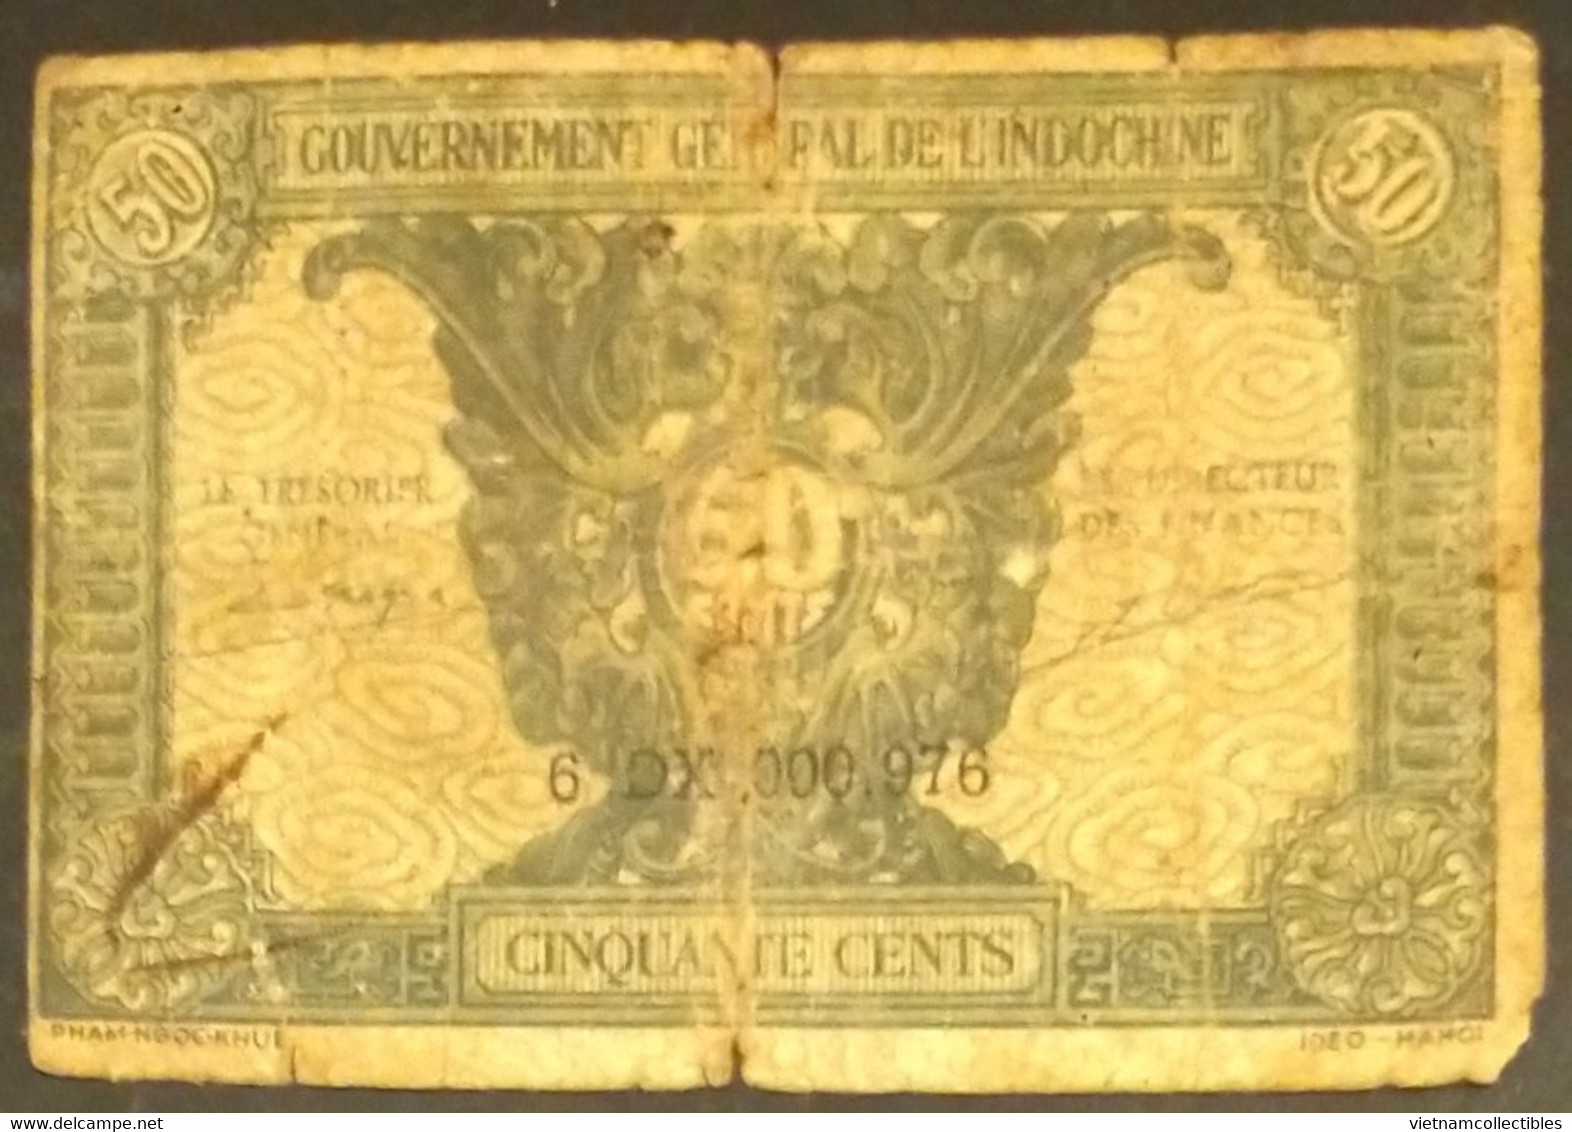 French Indochine Indochina Vietnam Viet Nam Laos Cambodia 50 Cents VG Banknote Note Billet 1942 - Pick # 91b / 2 Photos - Indochine